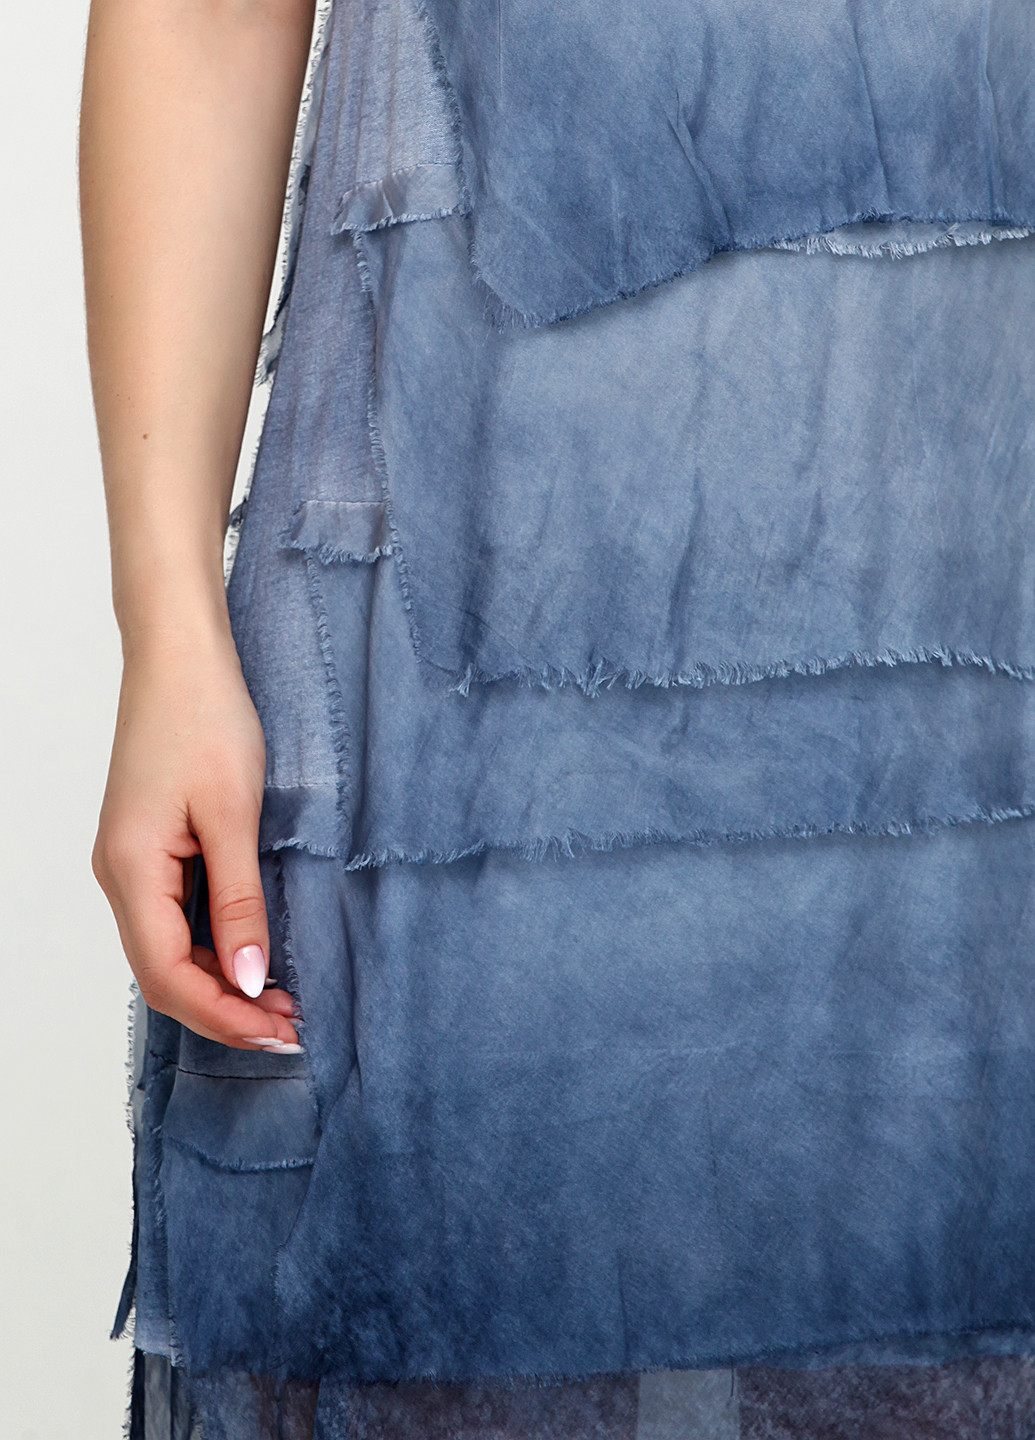 Синее кэжуал платье а-силуэт Made in Italy градиентное ("омбре")